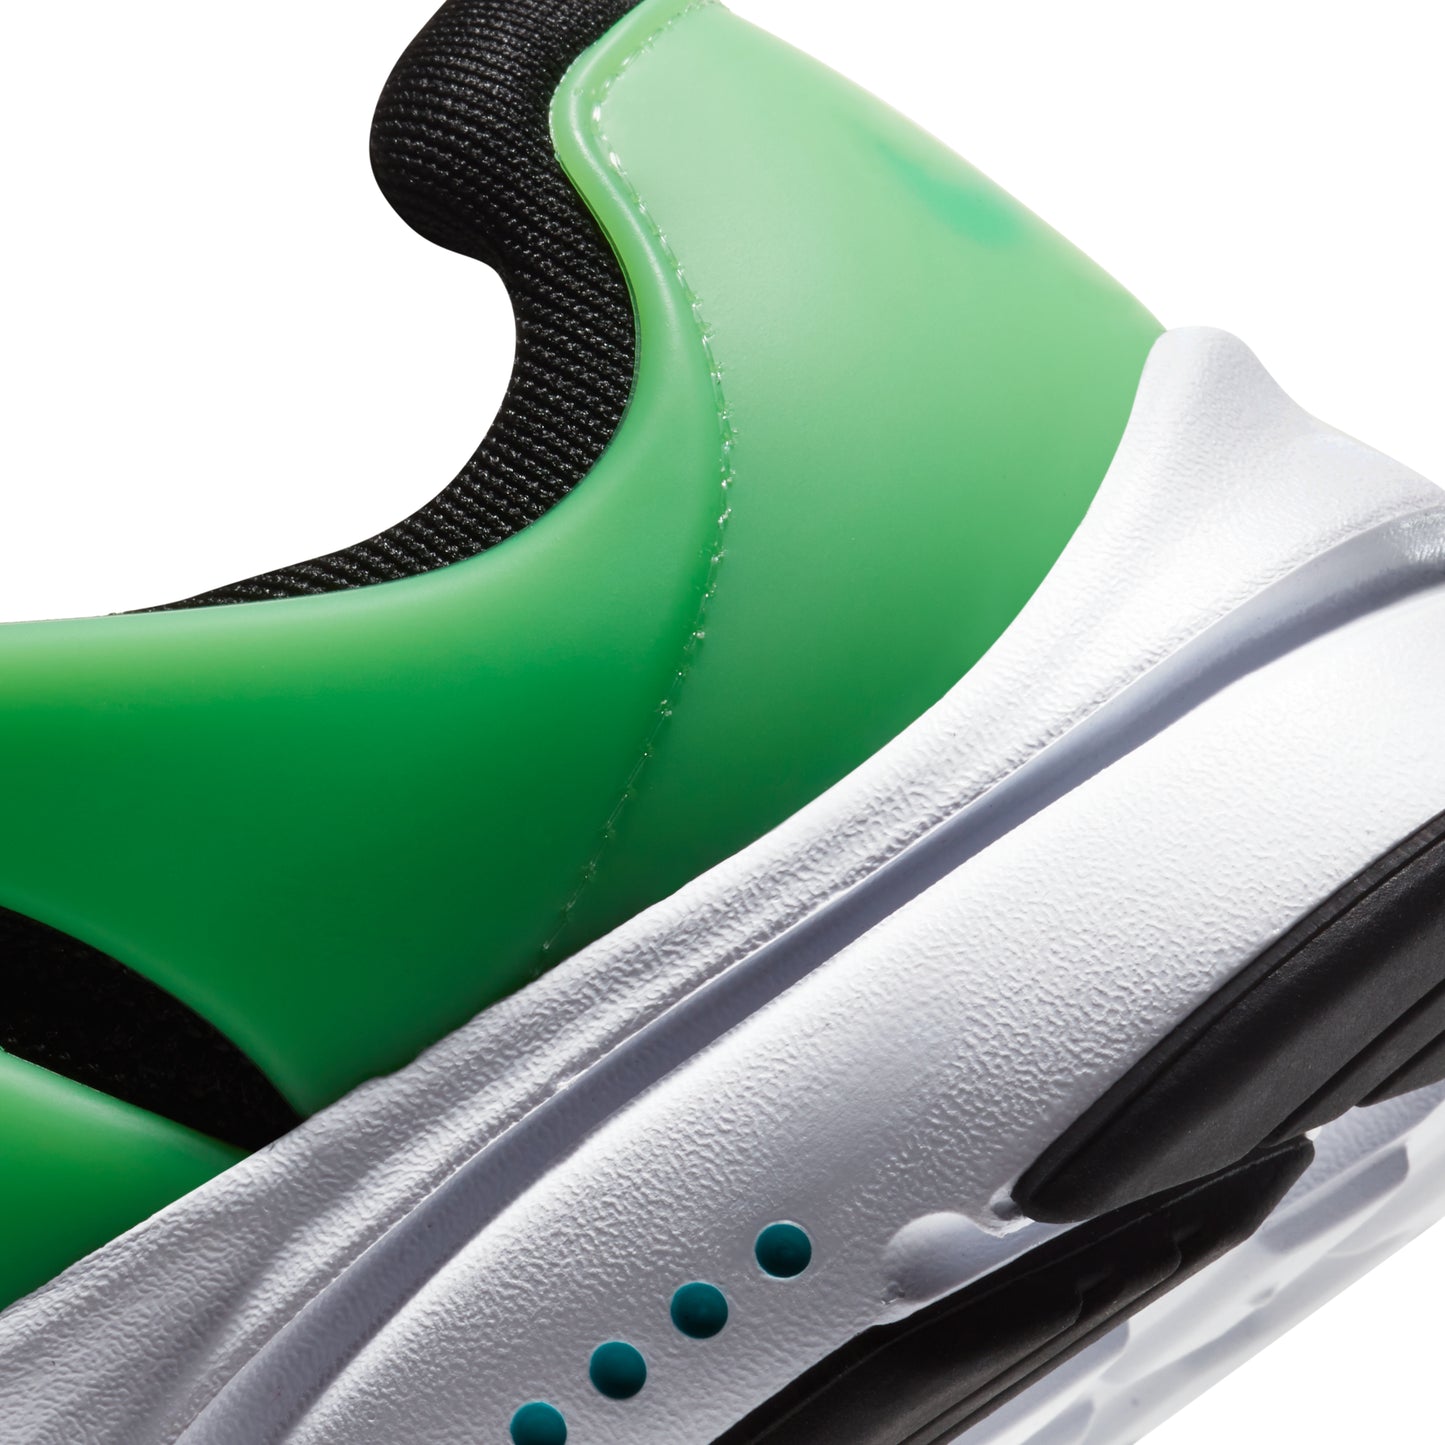 Nike Air Presto Green Strike (GS)